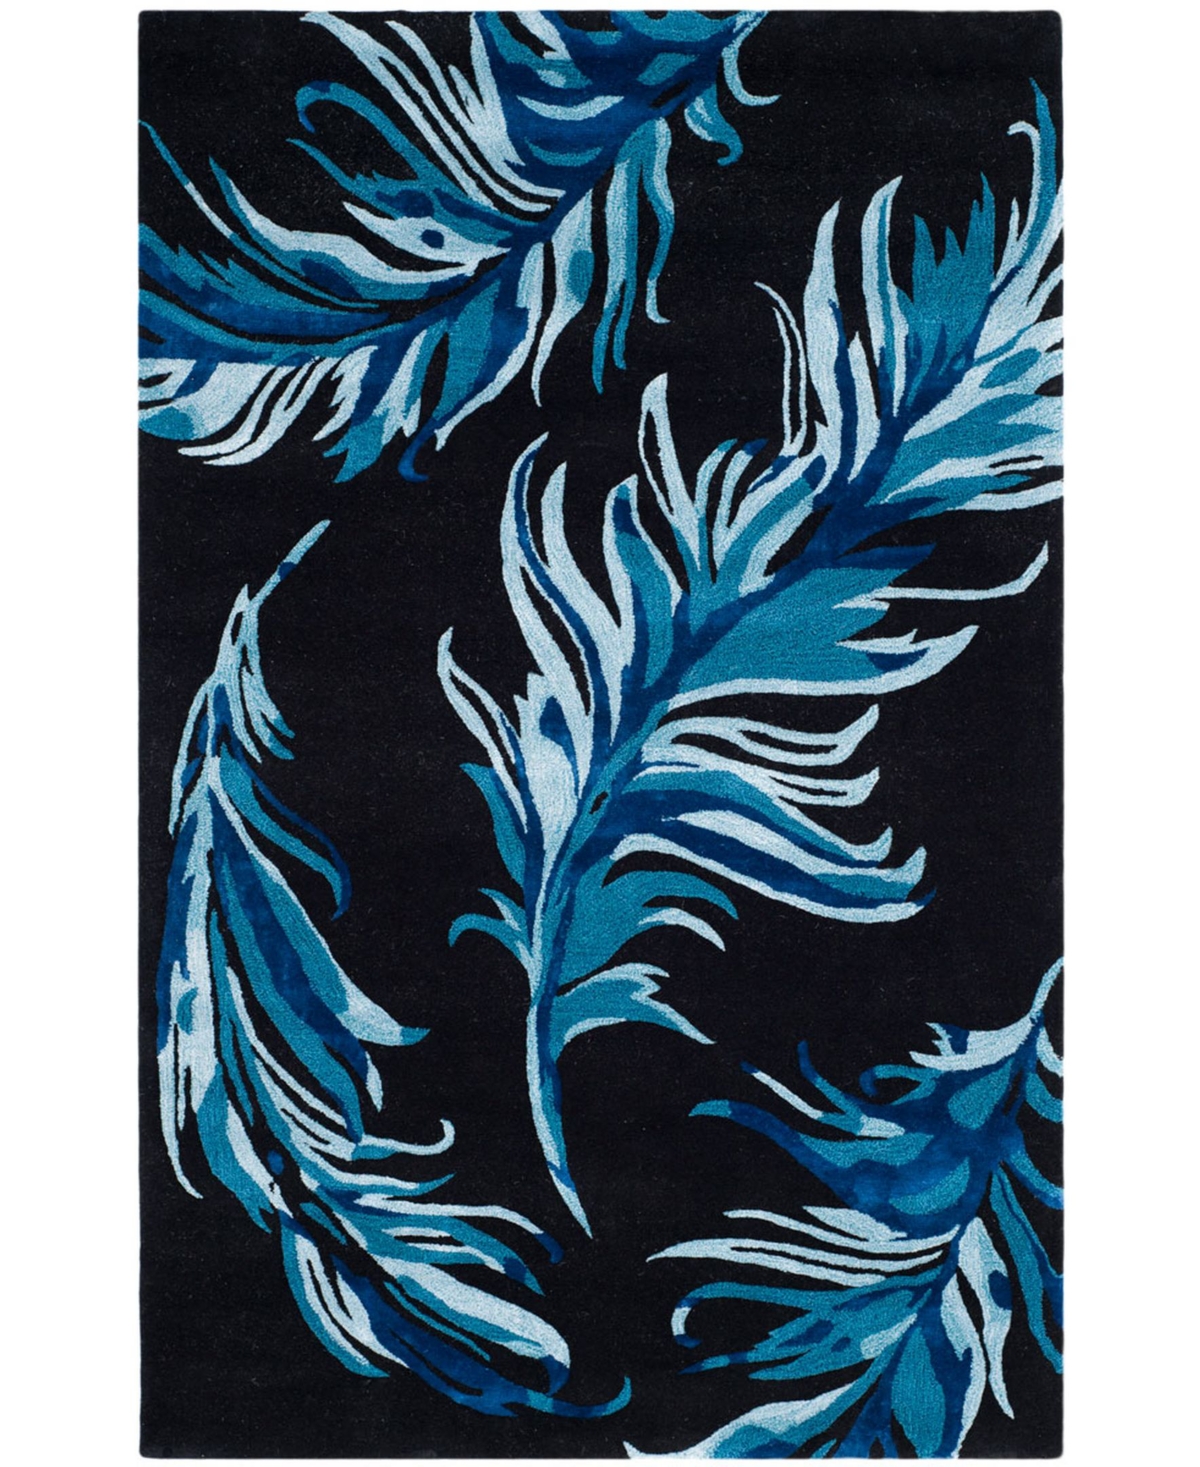 Safavieh Allure Feather Black and Blue 5' x 8' Area Rug - Black